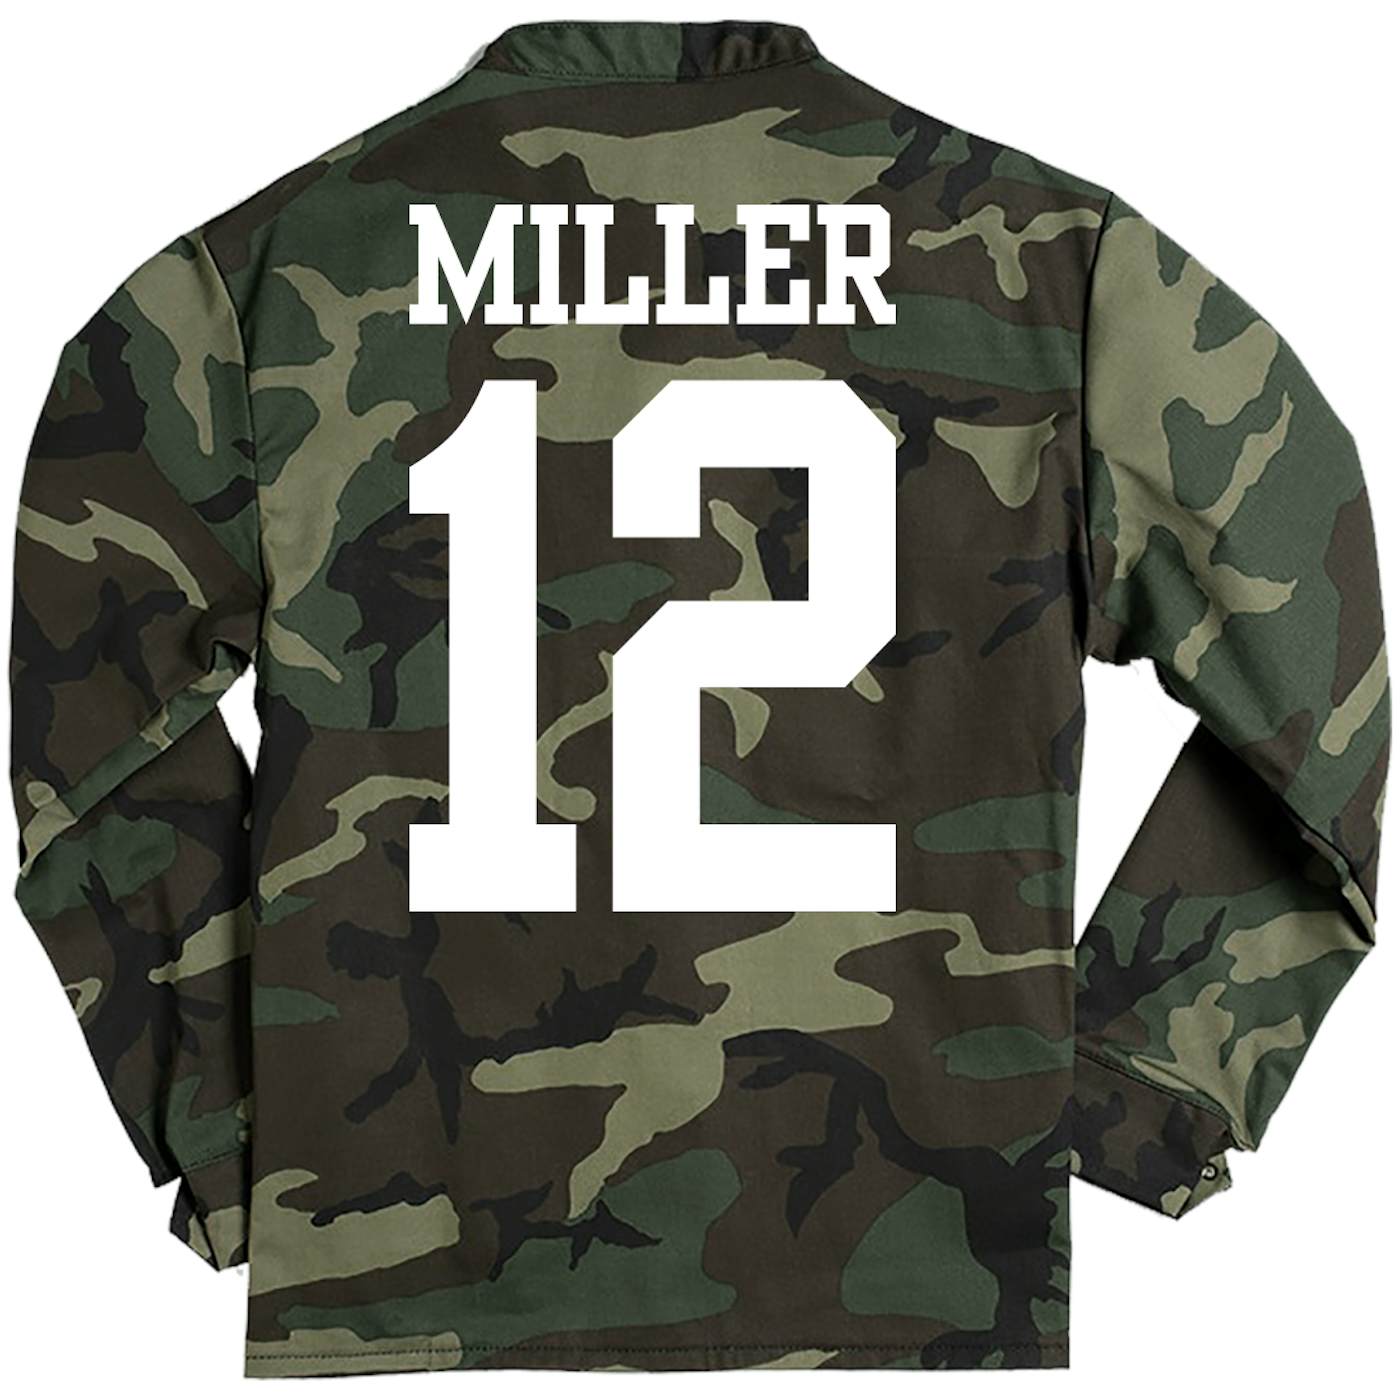 Jake Miller Millertary Camouflage Jacket